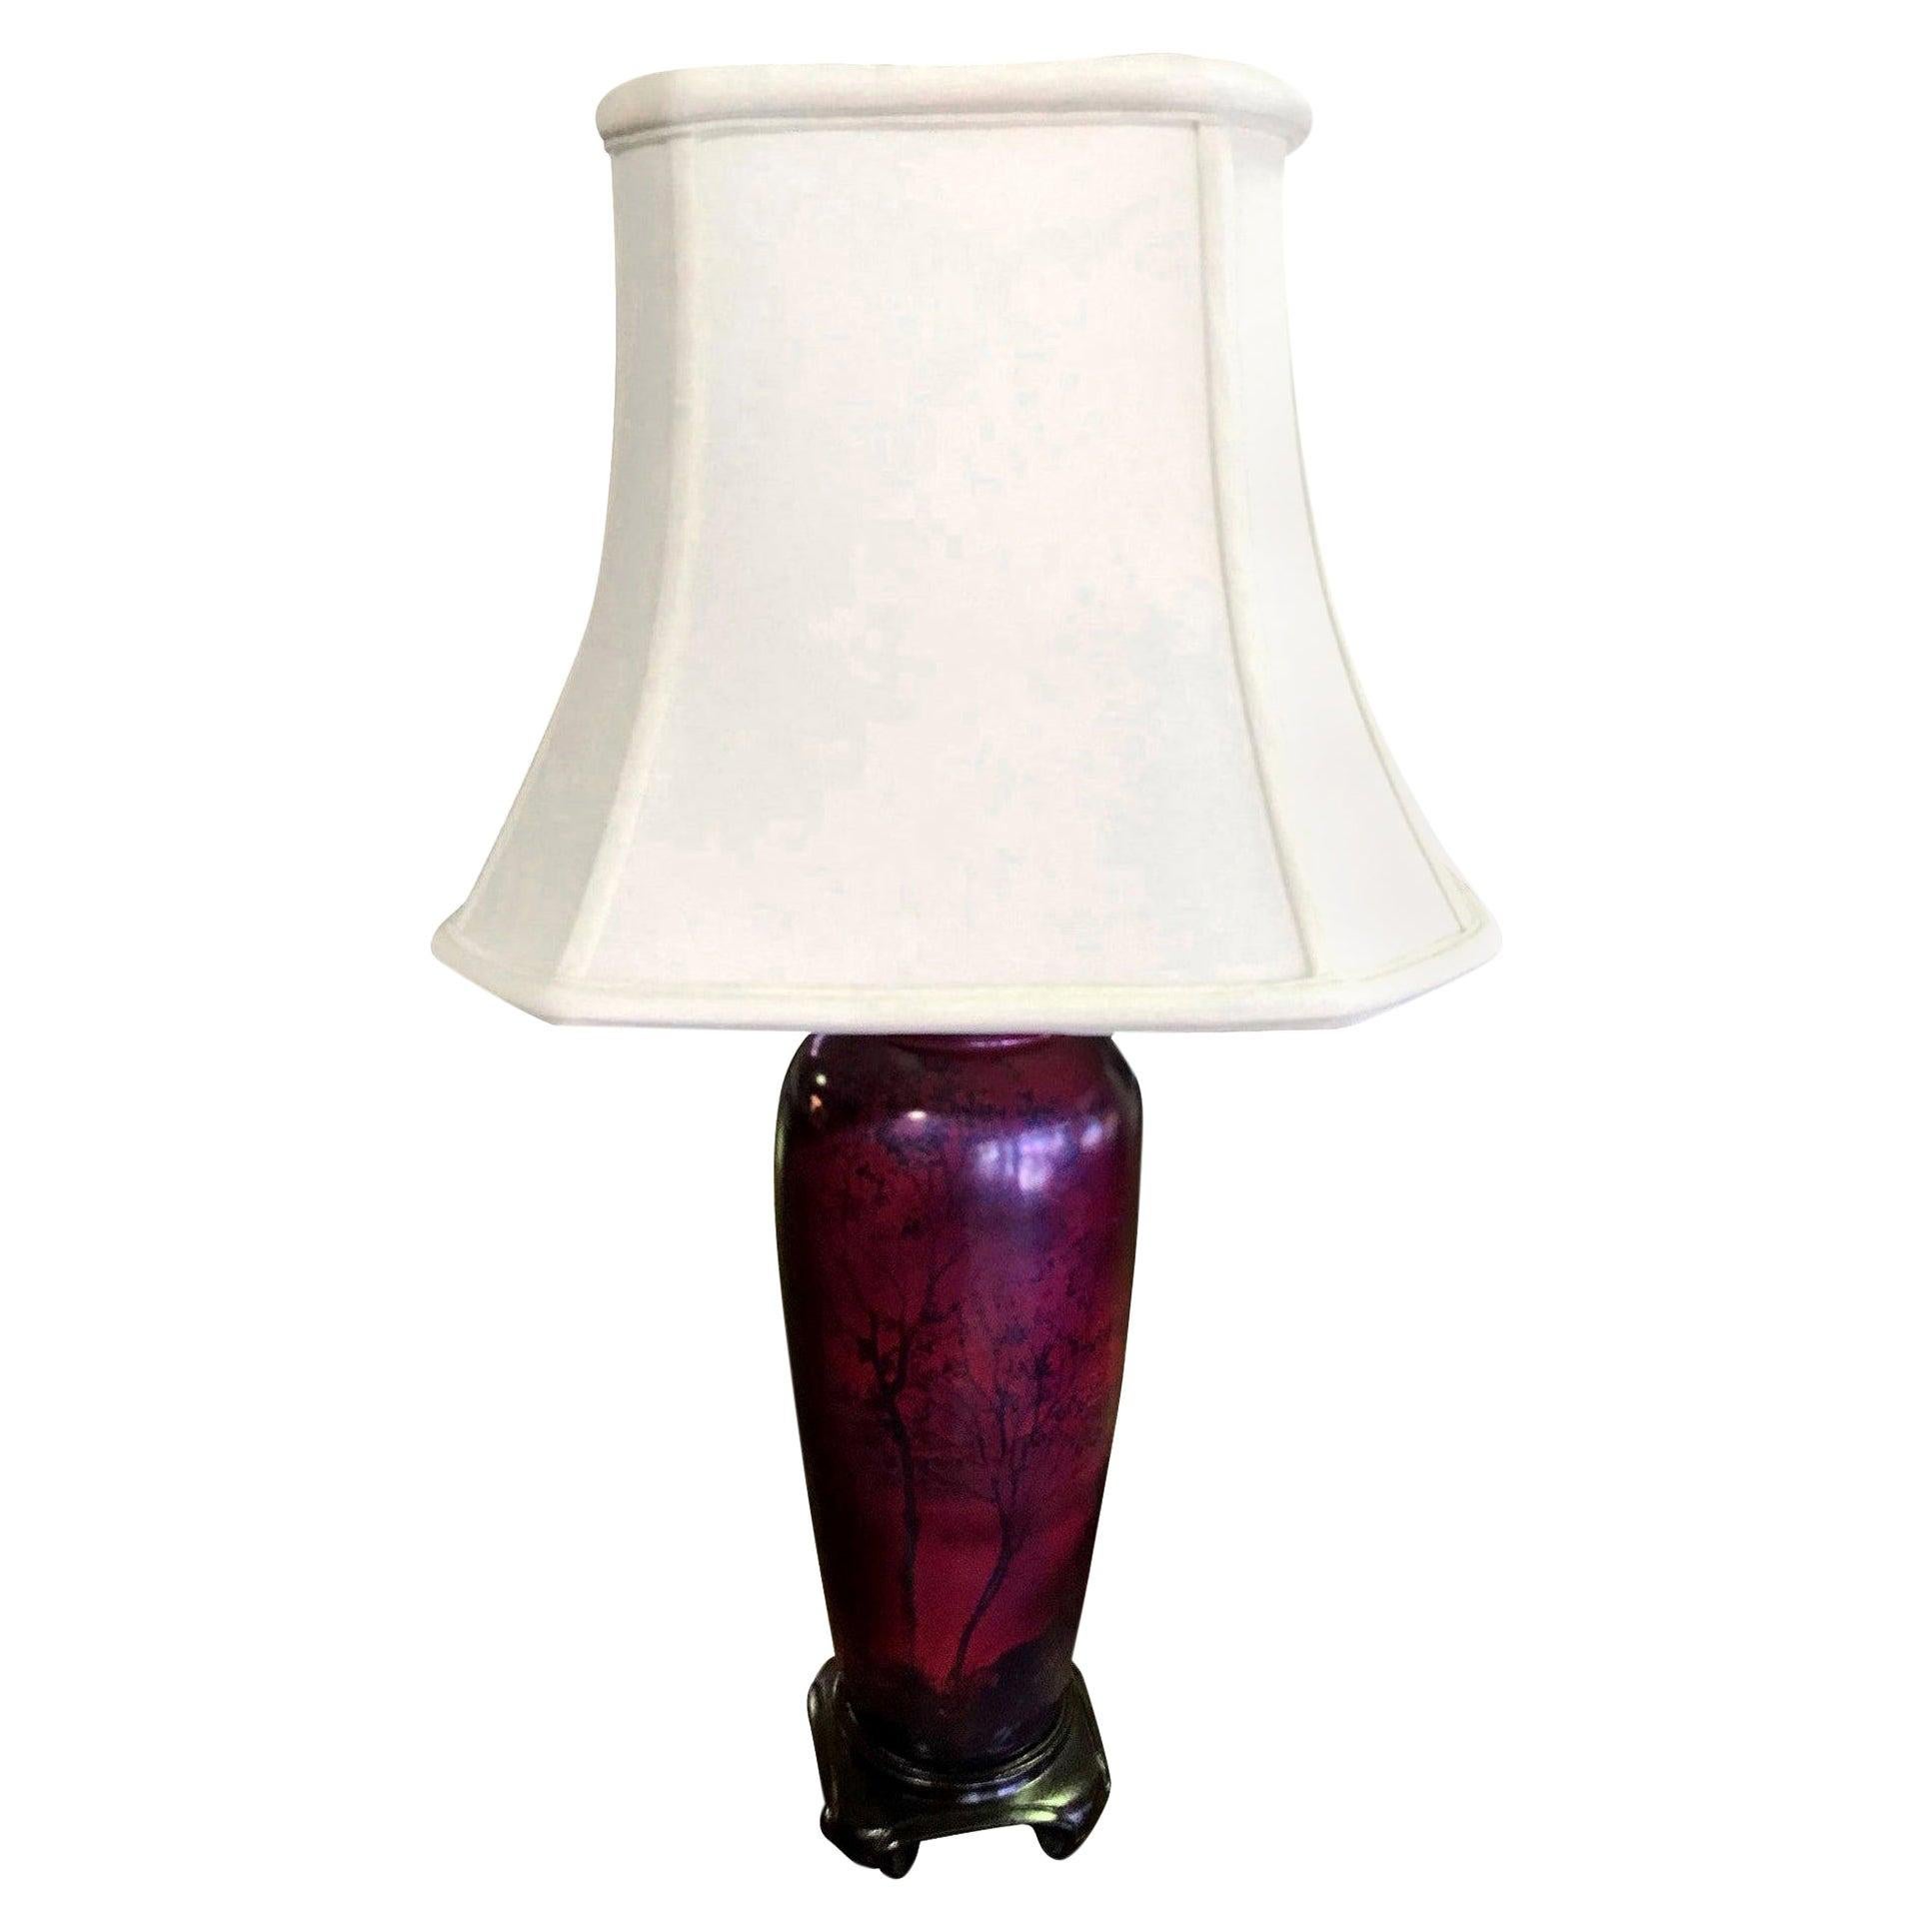 Weller Pottery Lasa or Lamar Scenic Tree Vase Ceramic Lamp with Shade